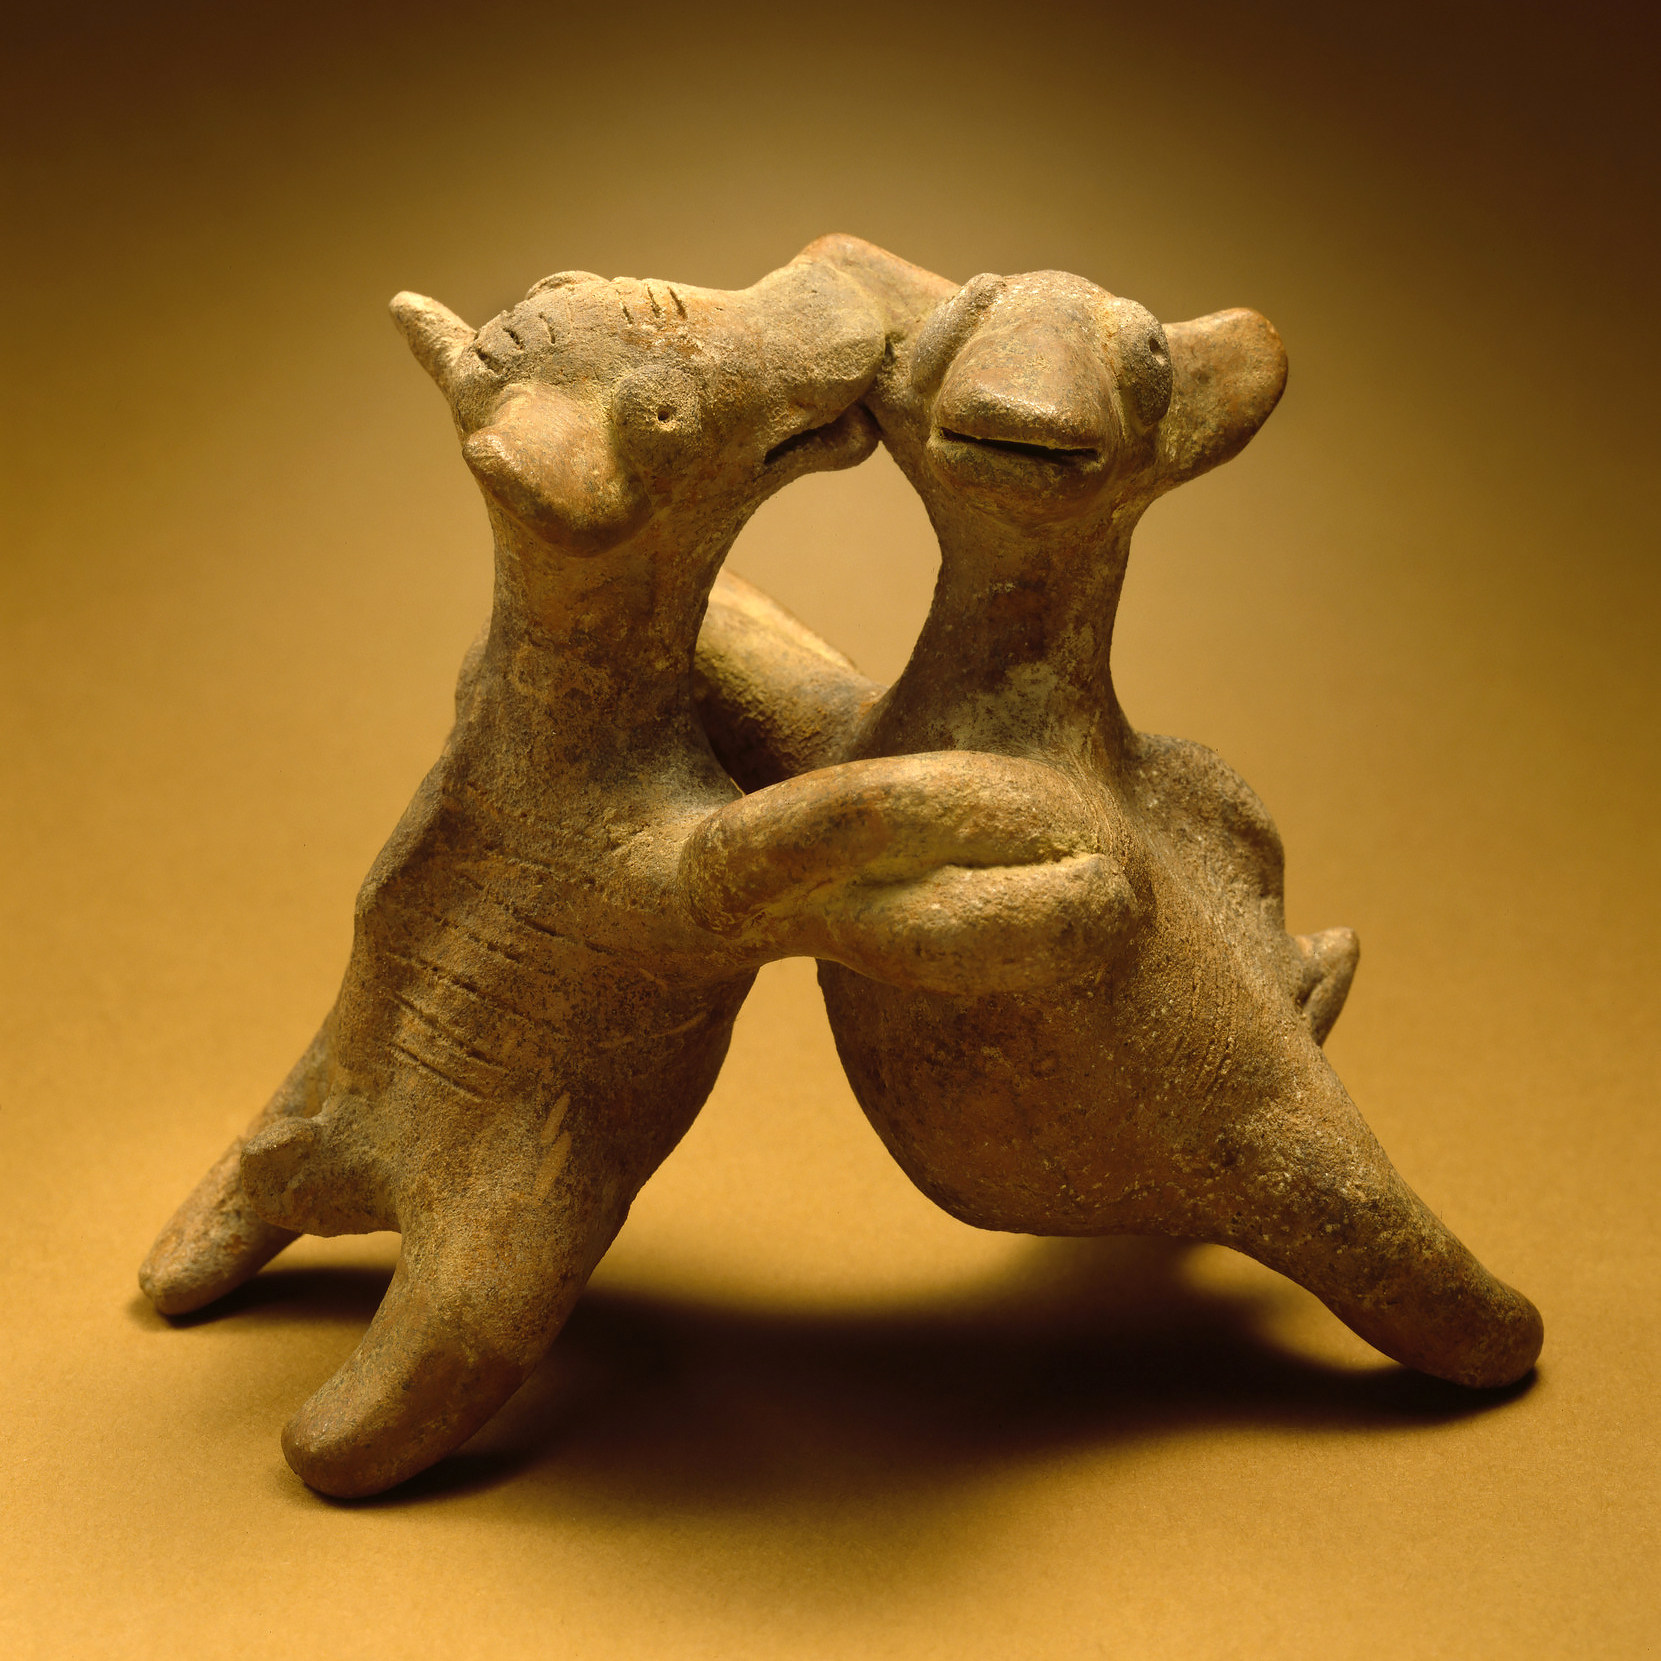 Играющие собаки. Колима, 200 гг. до н.э. - 500 гг. н.э. Коллекция Los Angeles County Museum of Art.